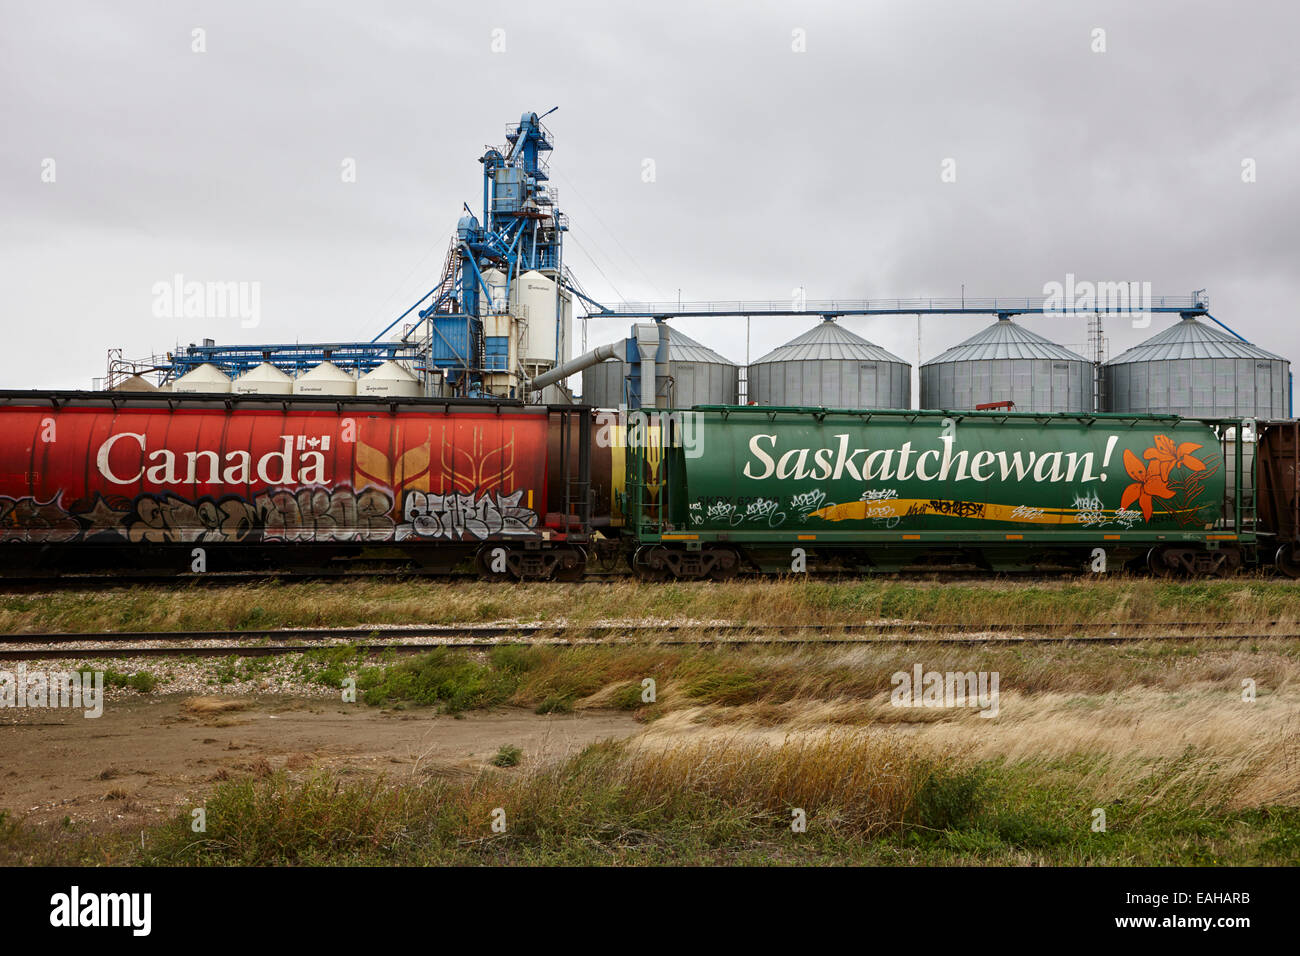 Kanada und Saskatchewan Fracht Getreidekipper auf canadian pacific Railway Saskatchewan Kanada Stockfoto